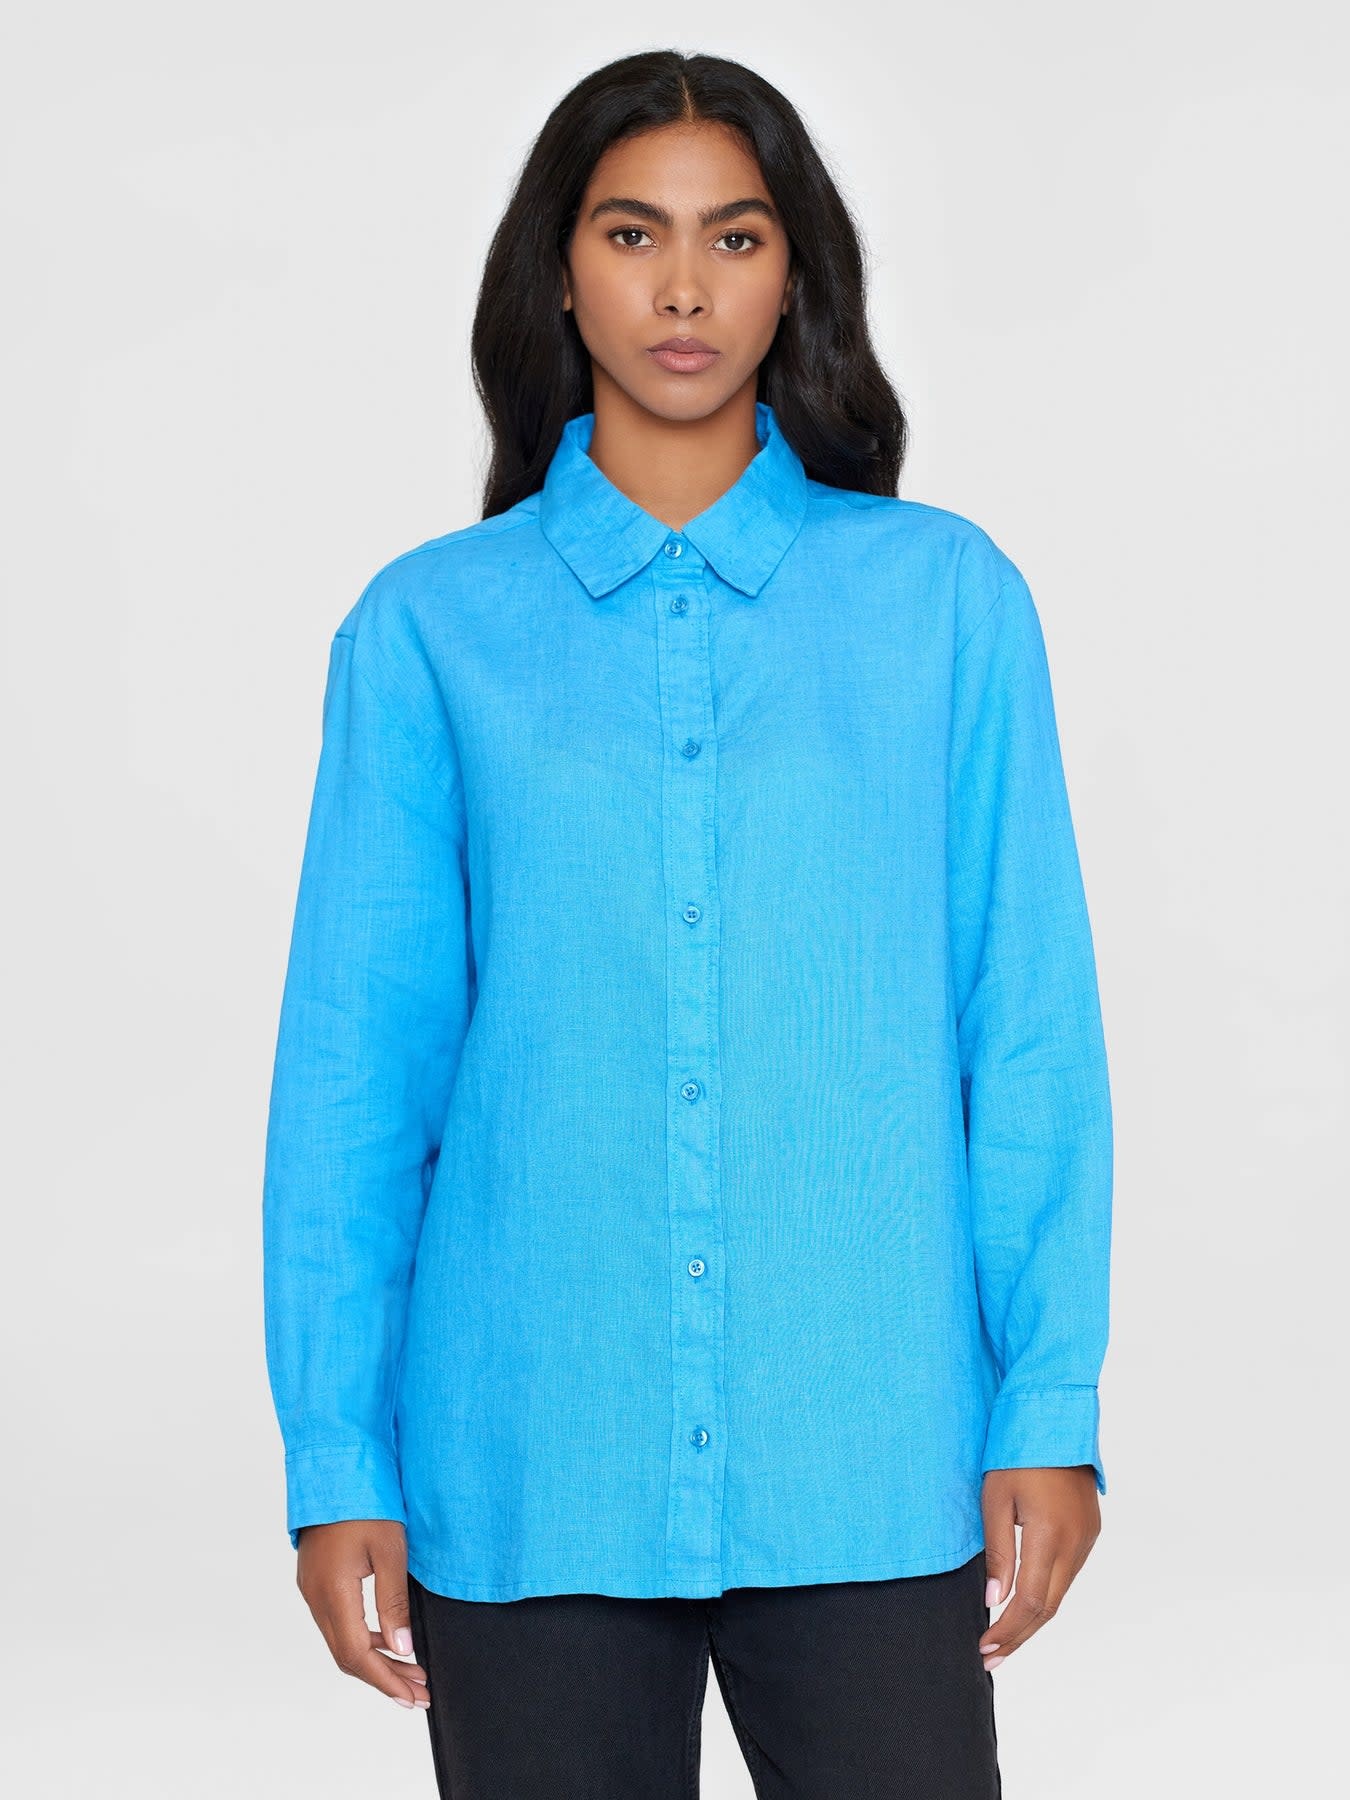 KnowledgeCotton Apparel KnowledgeCotton, Loose Linen Shirt, malibu blue, S